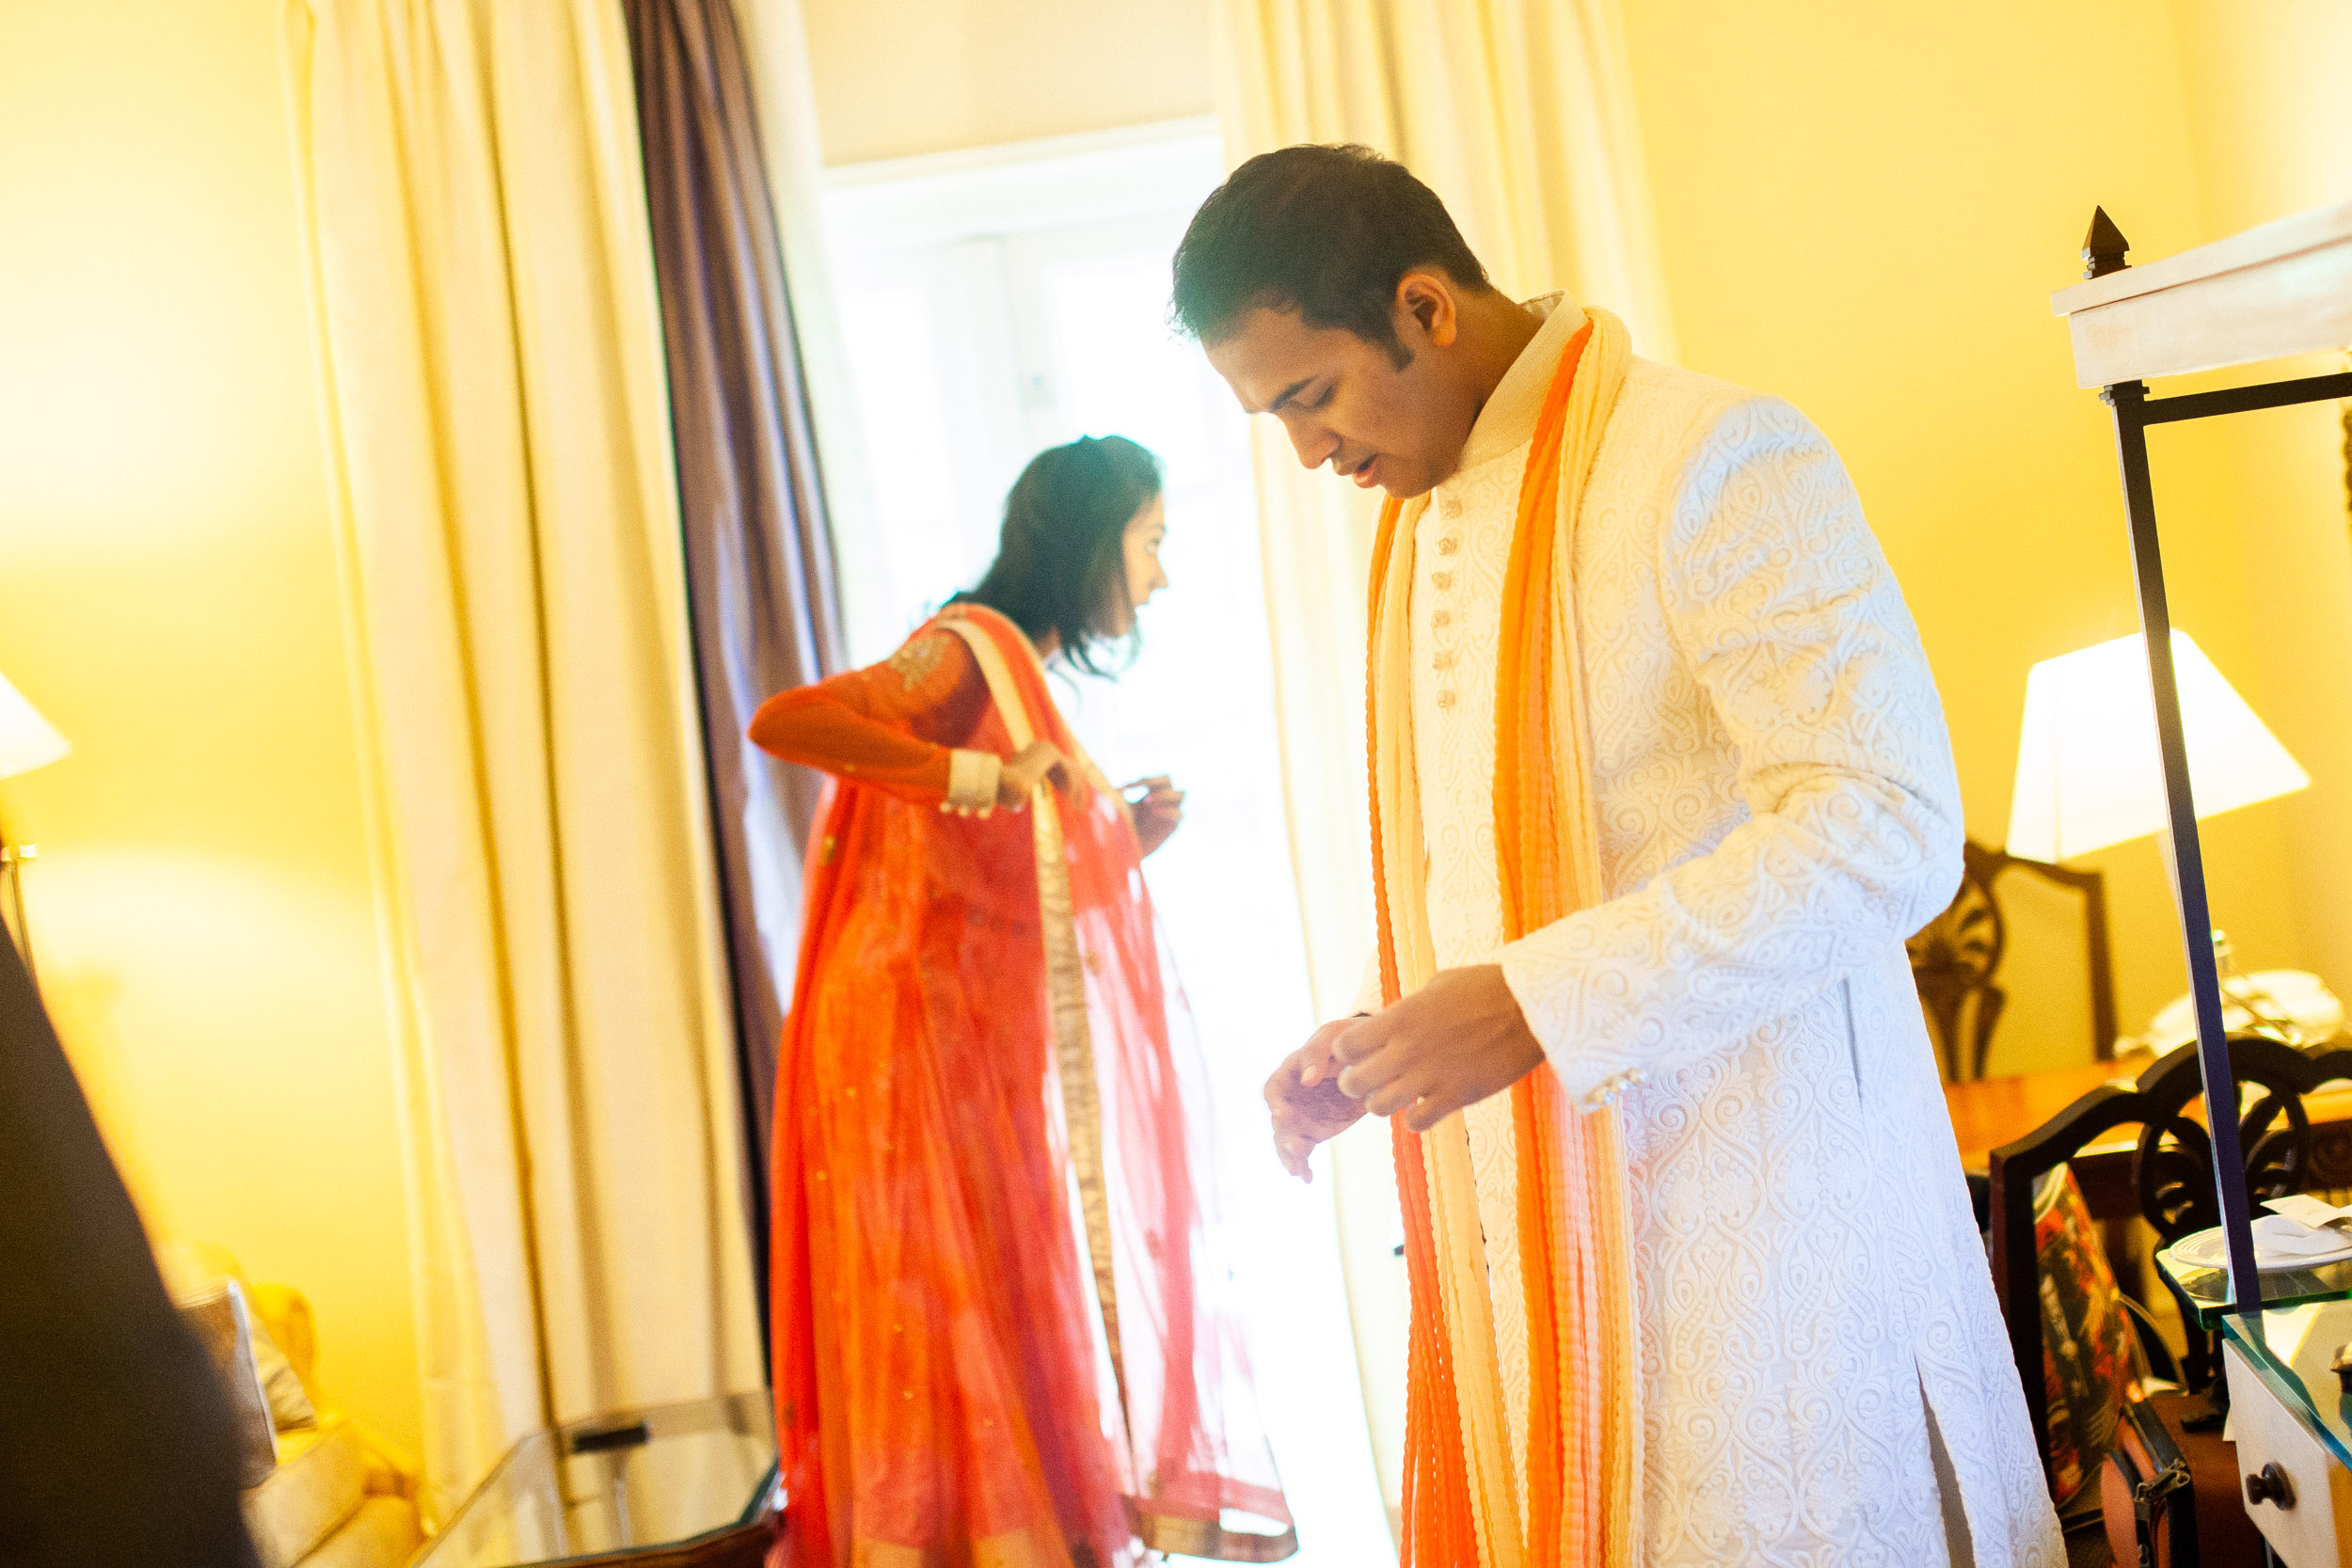 punjabi wedding at itc maynor bangalore dropdstudio